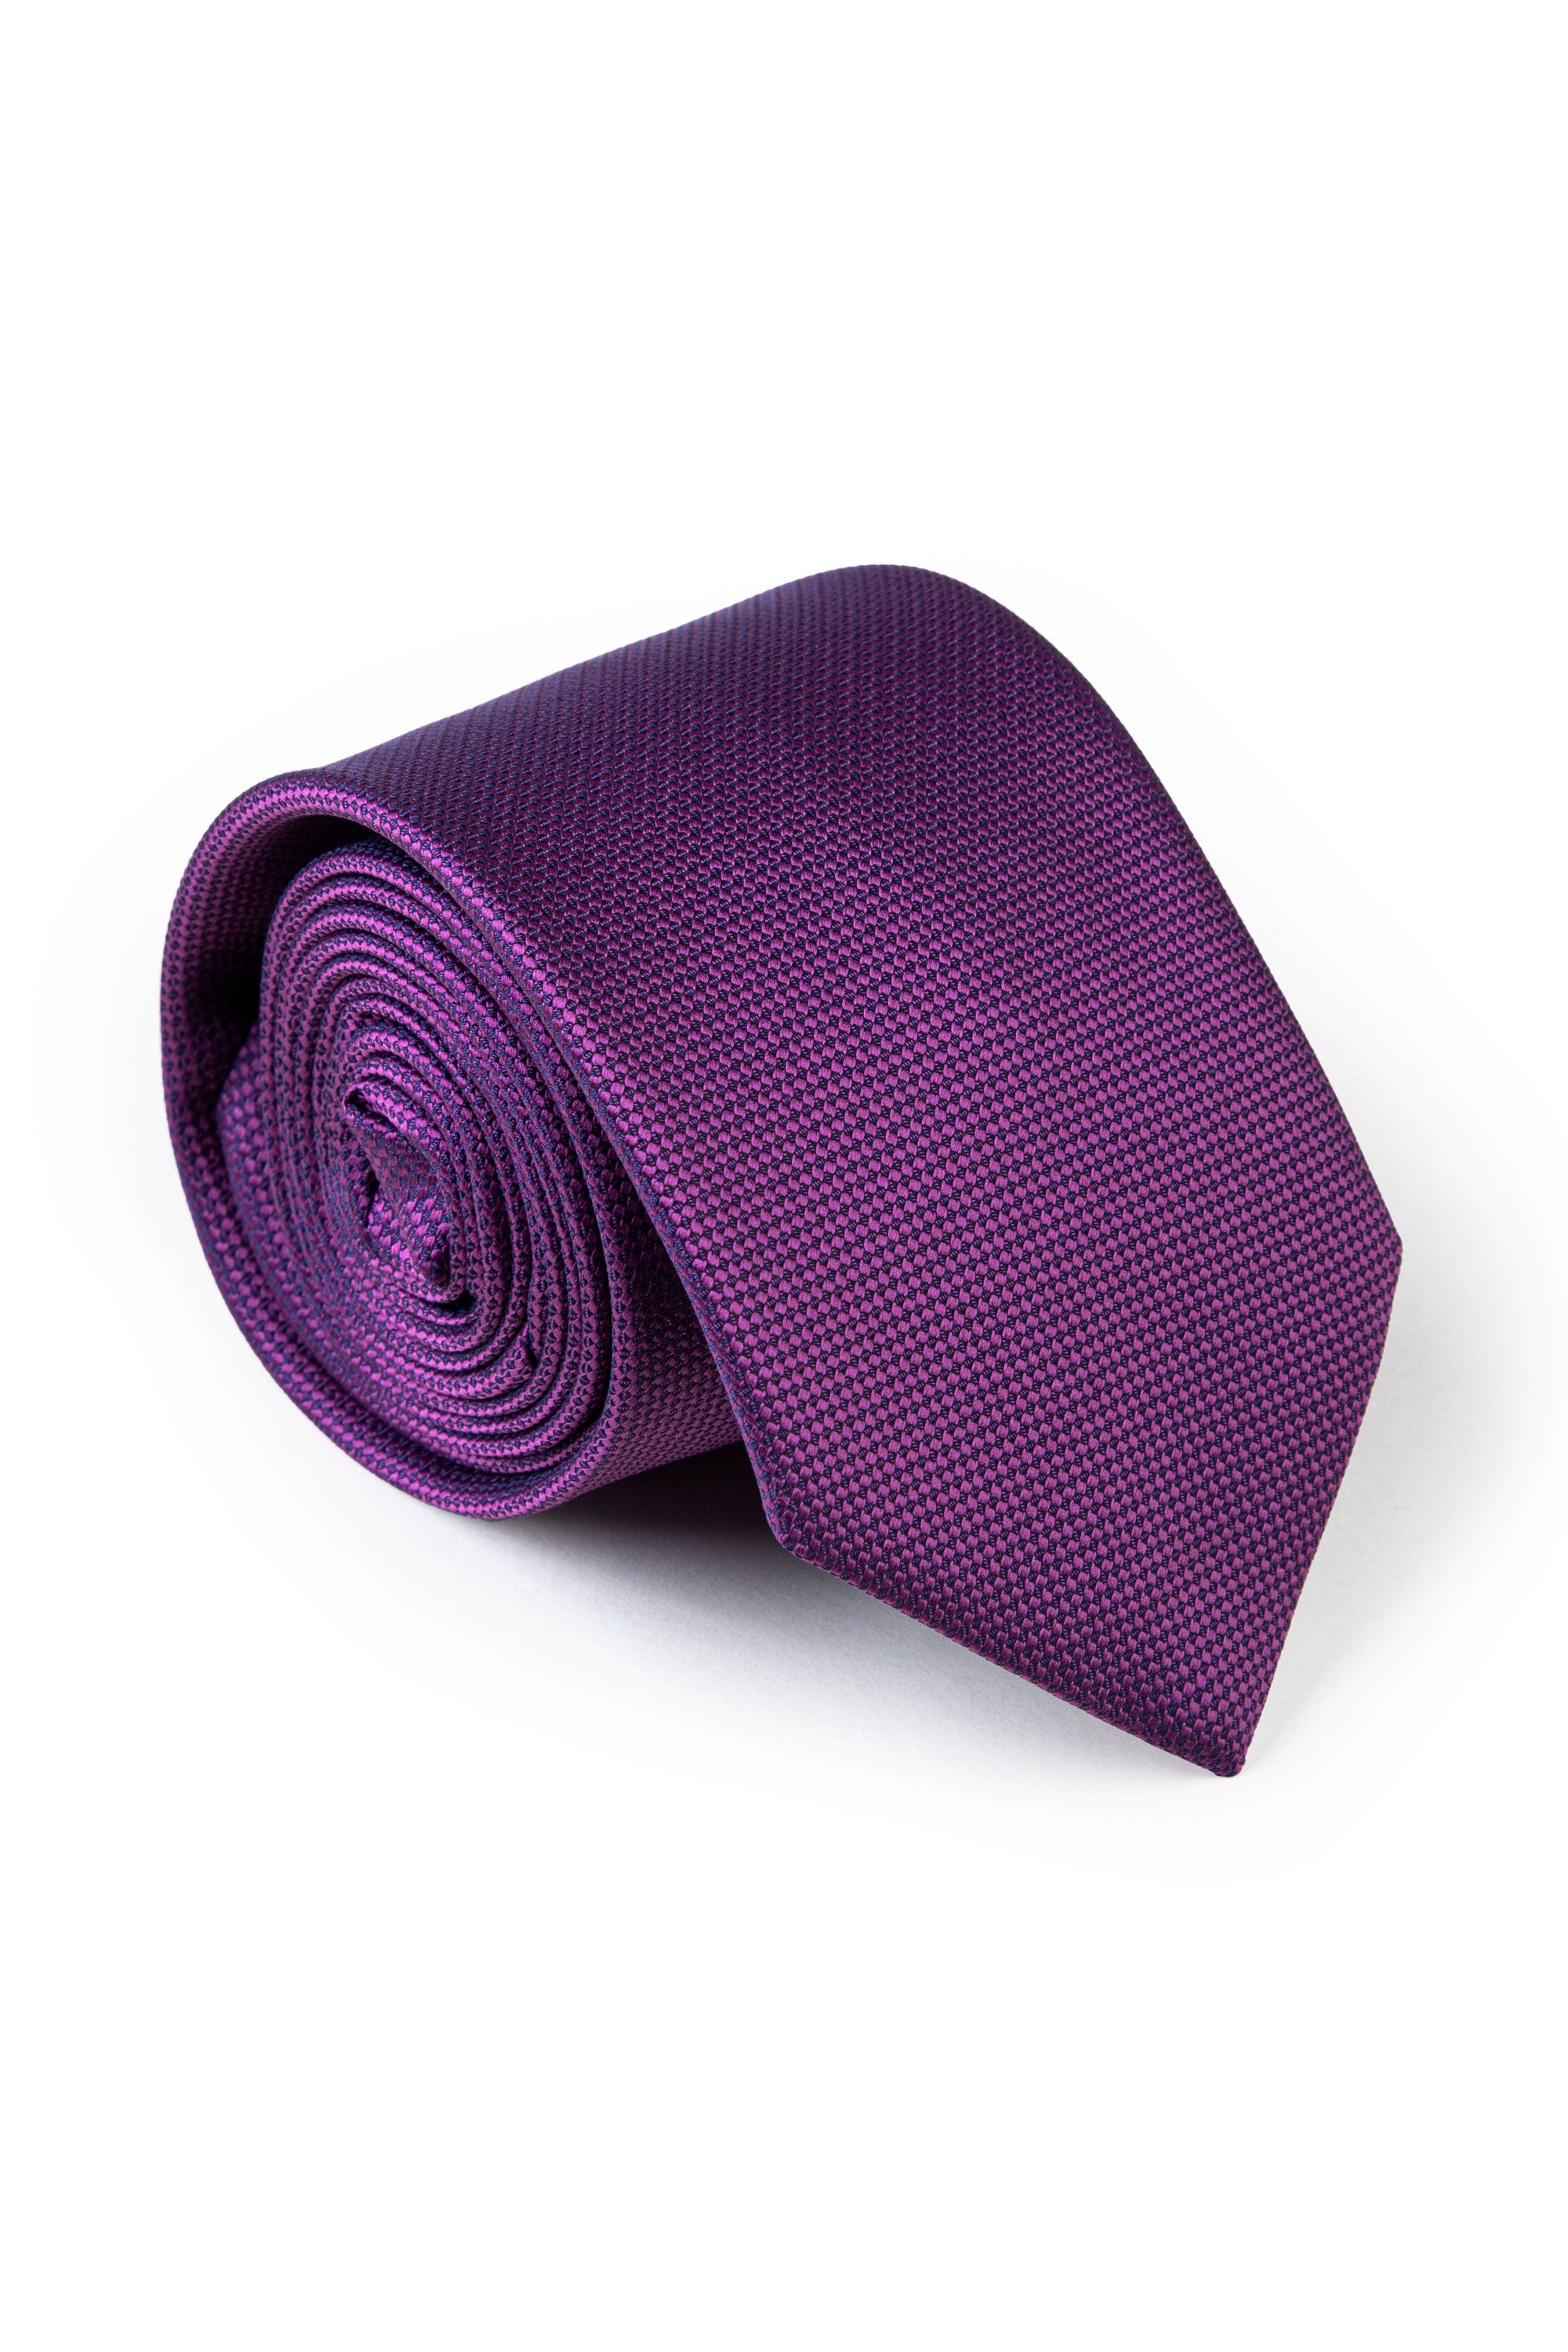 Formal Purple Tie Loose